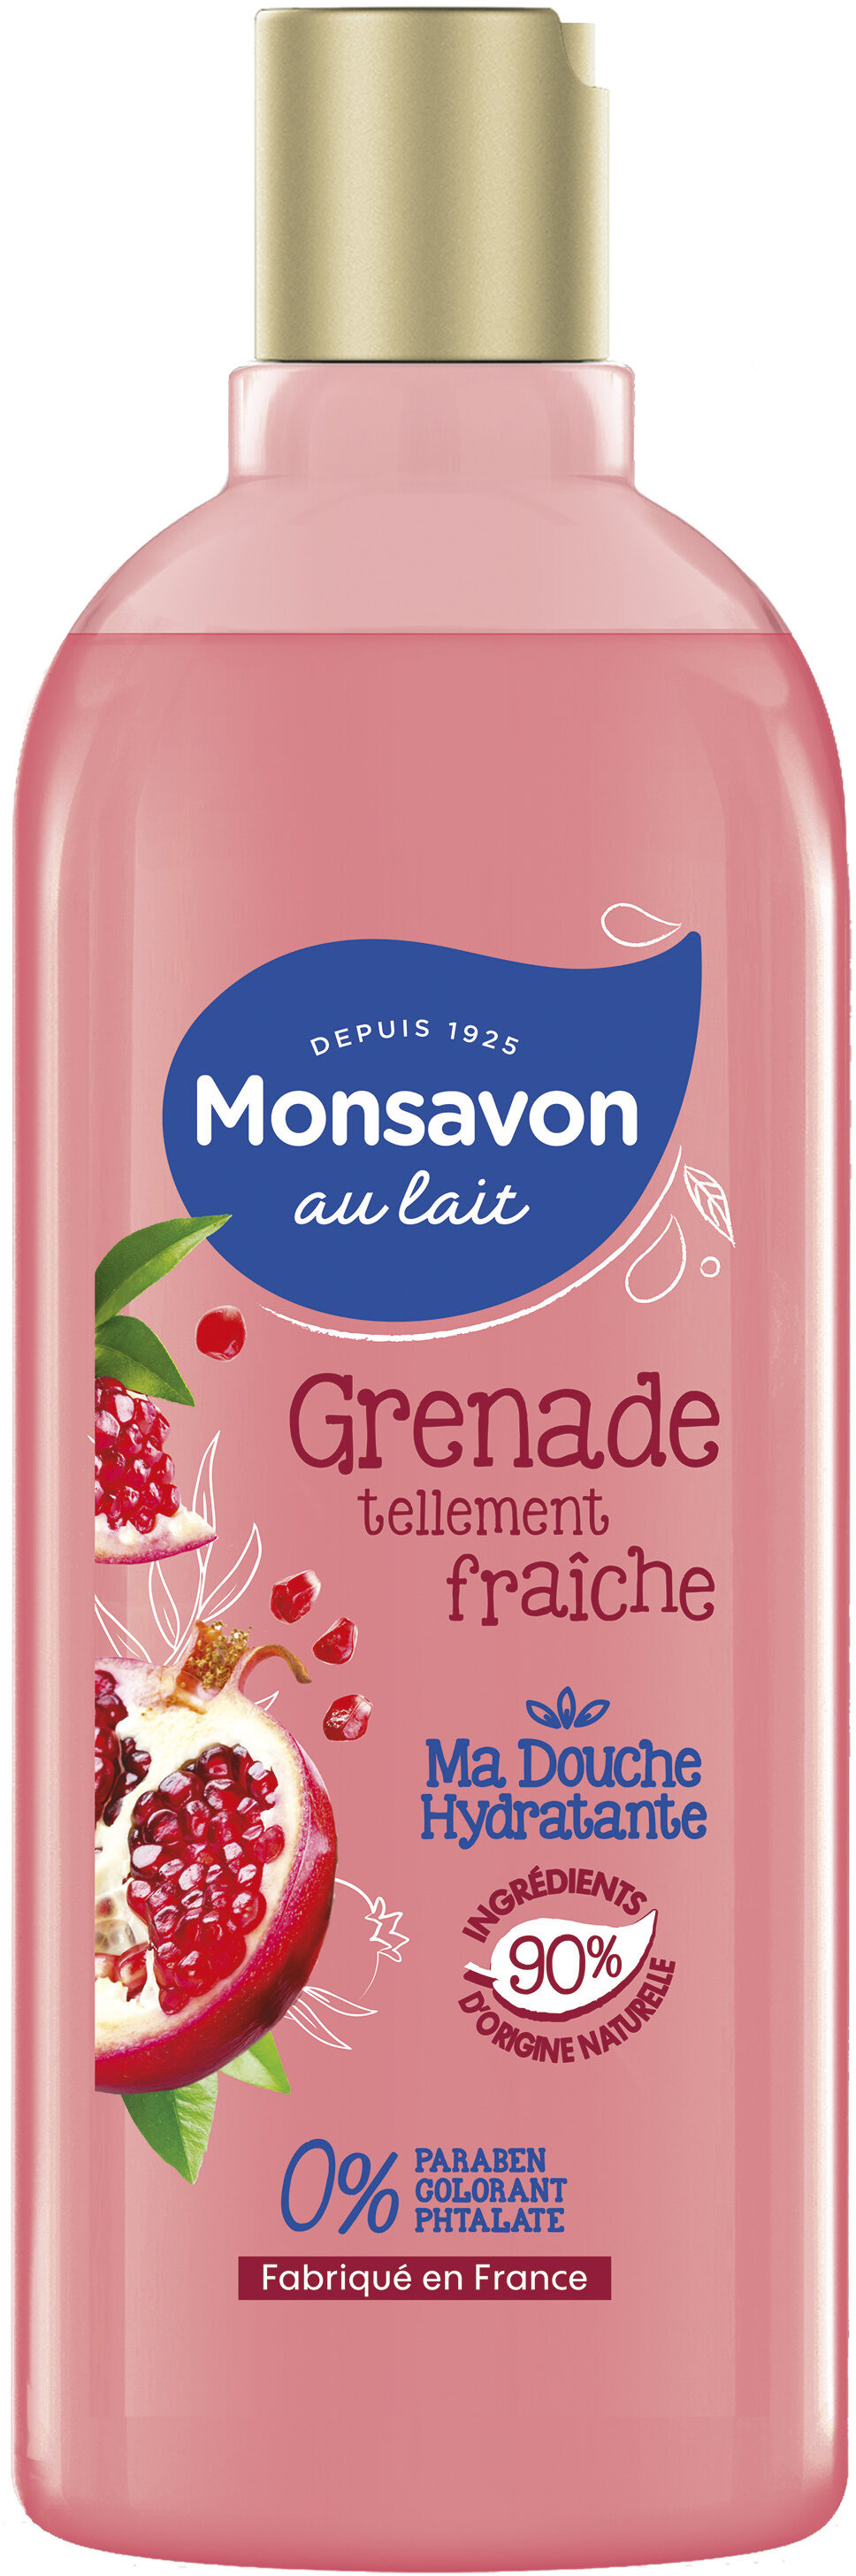 Monsavon Gel Douche Grenade Tellement Fraîche - Product - fr